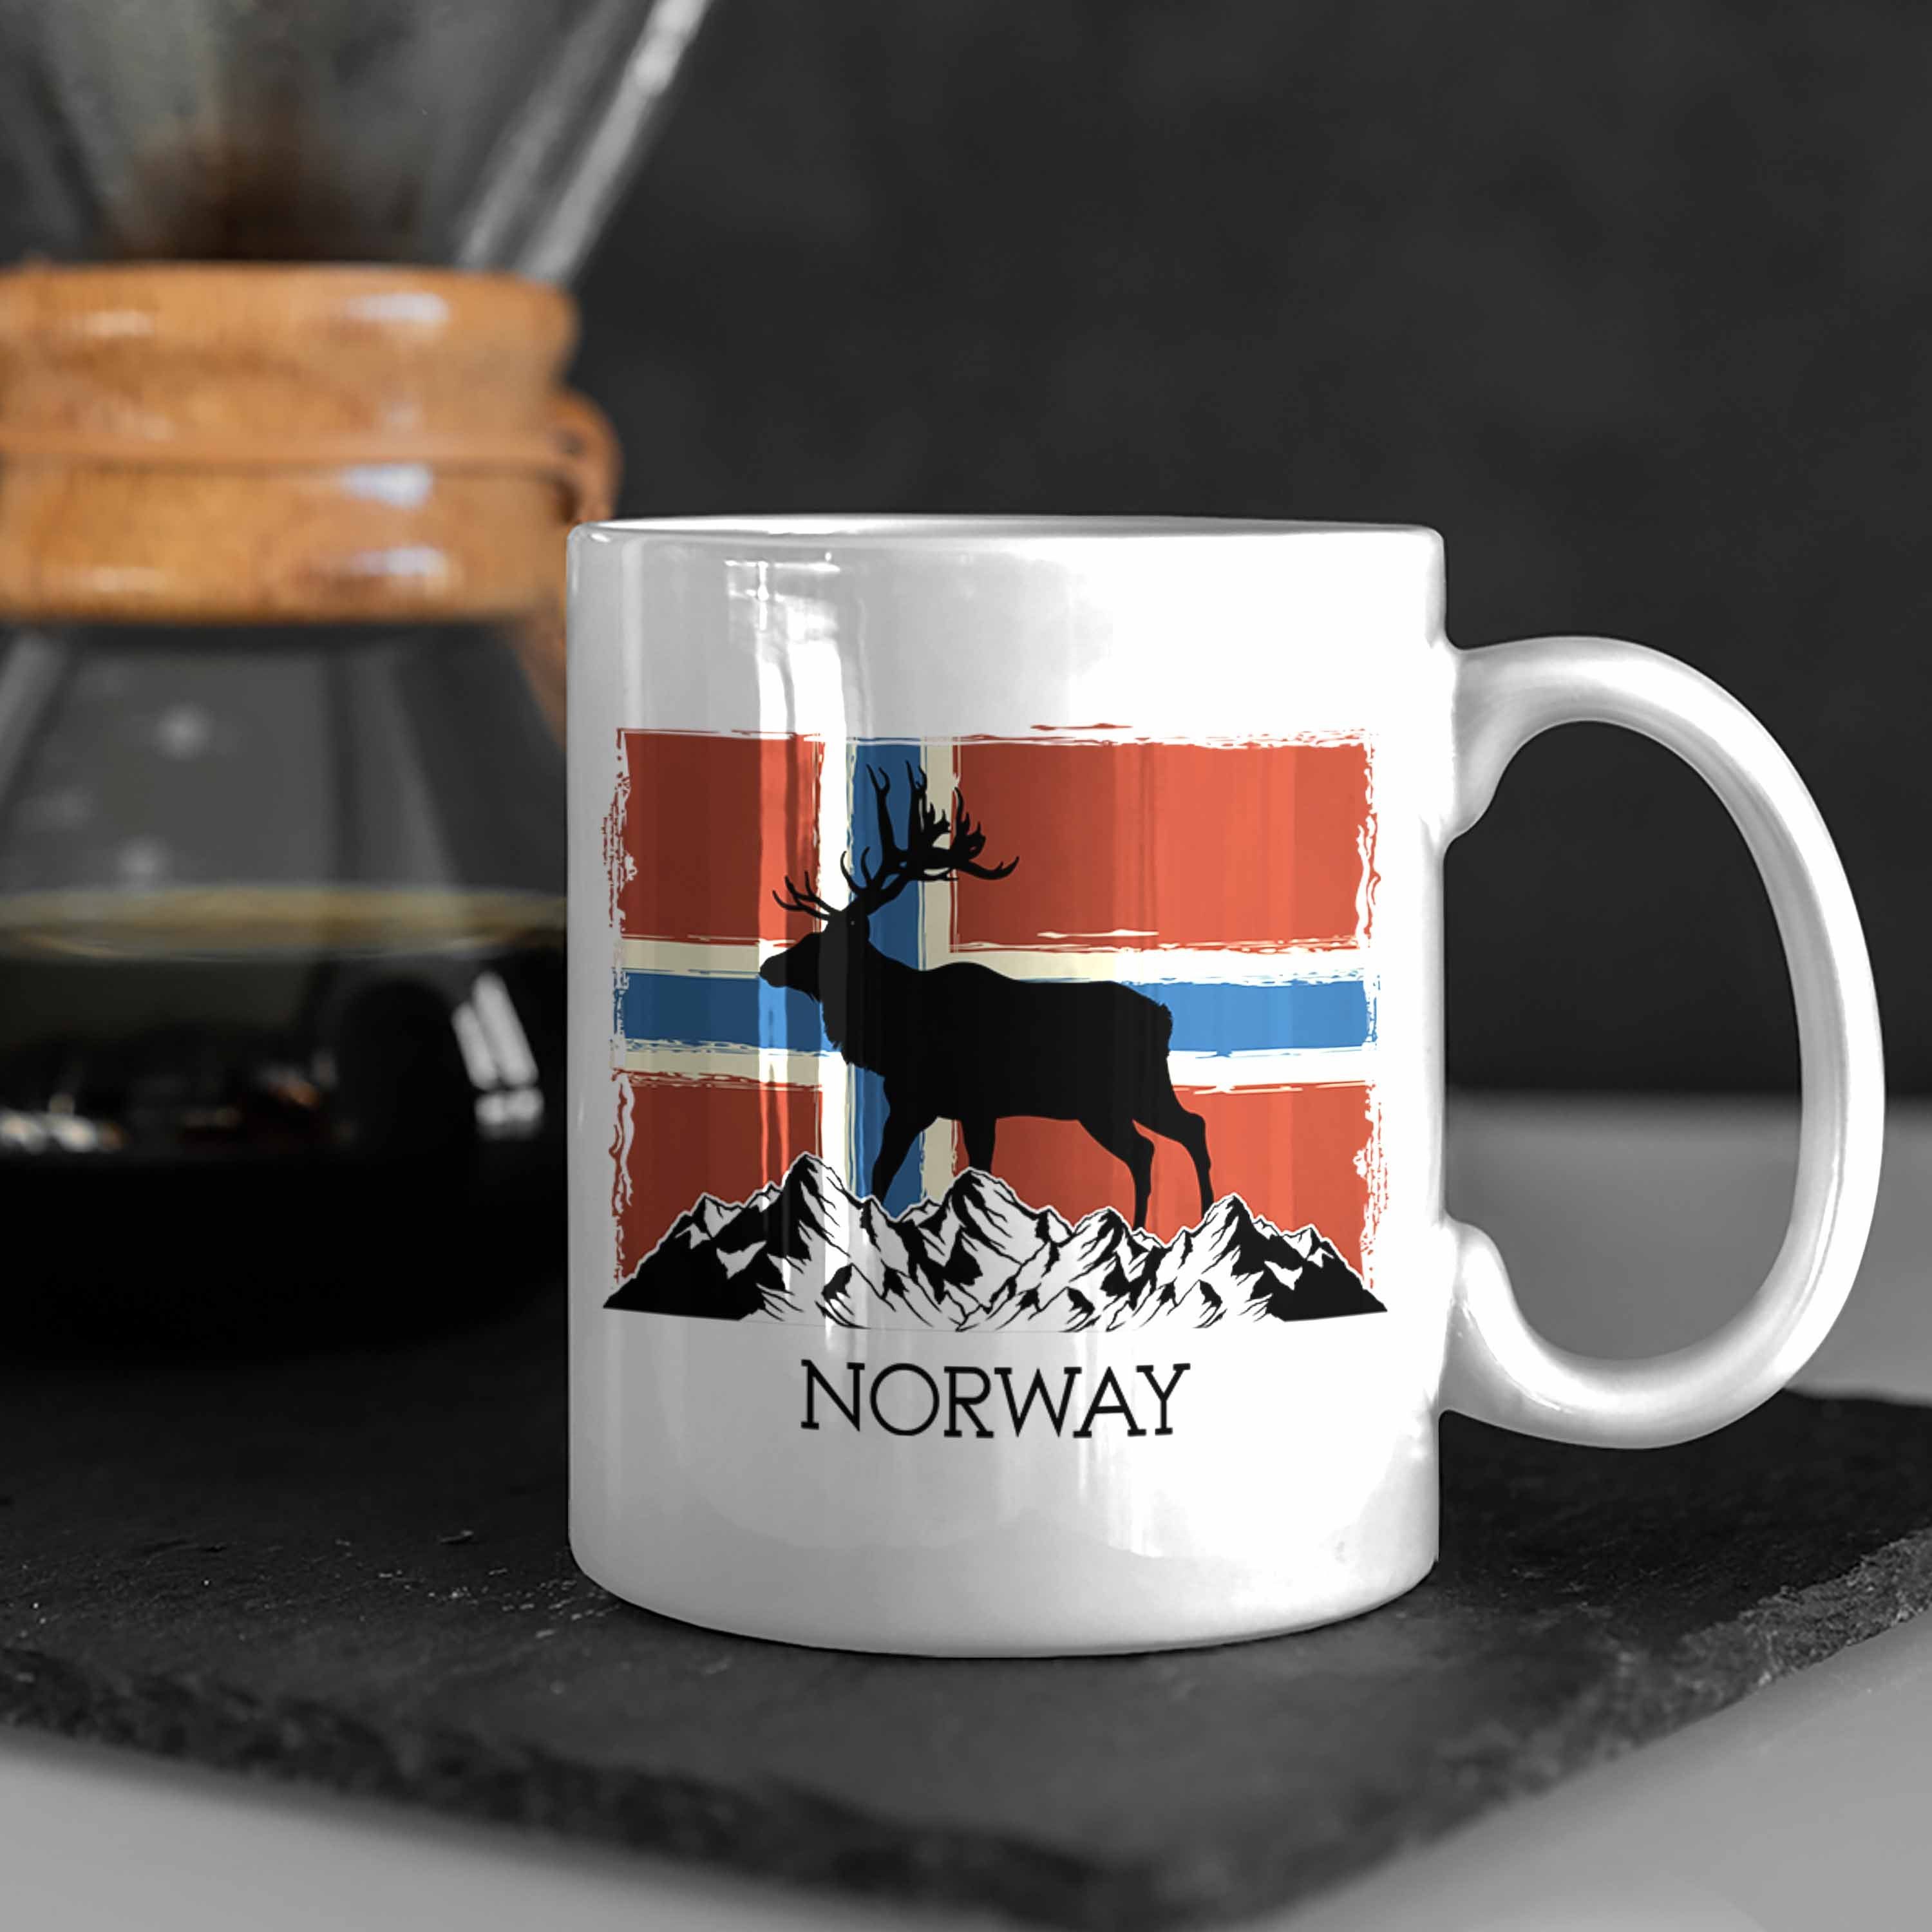 Nordkap Weiss Trendation Flagge Tasse Norwegen Norway - Trendation Geschenke Tasse Elch